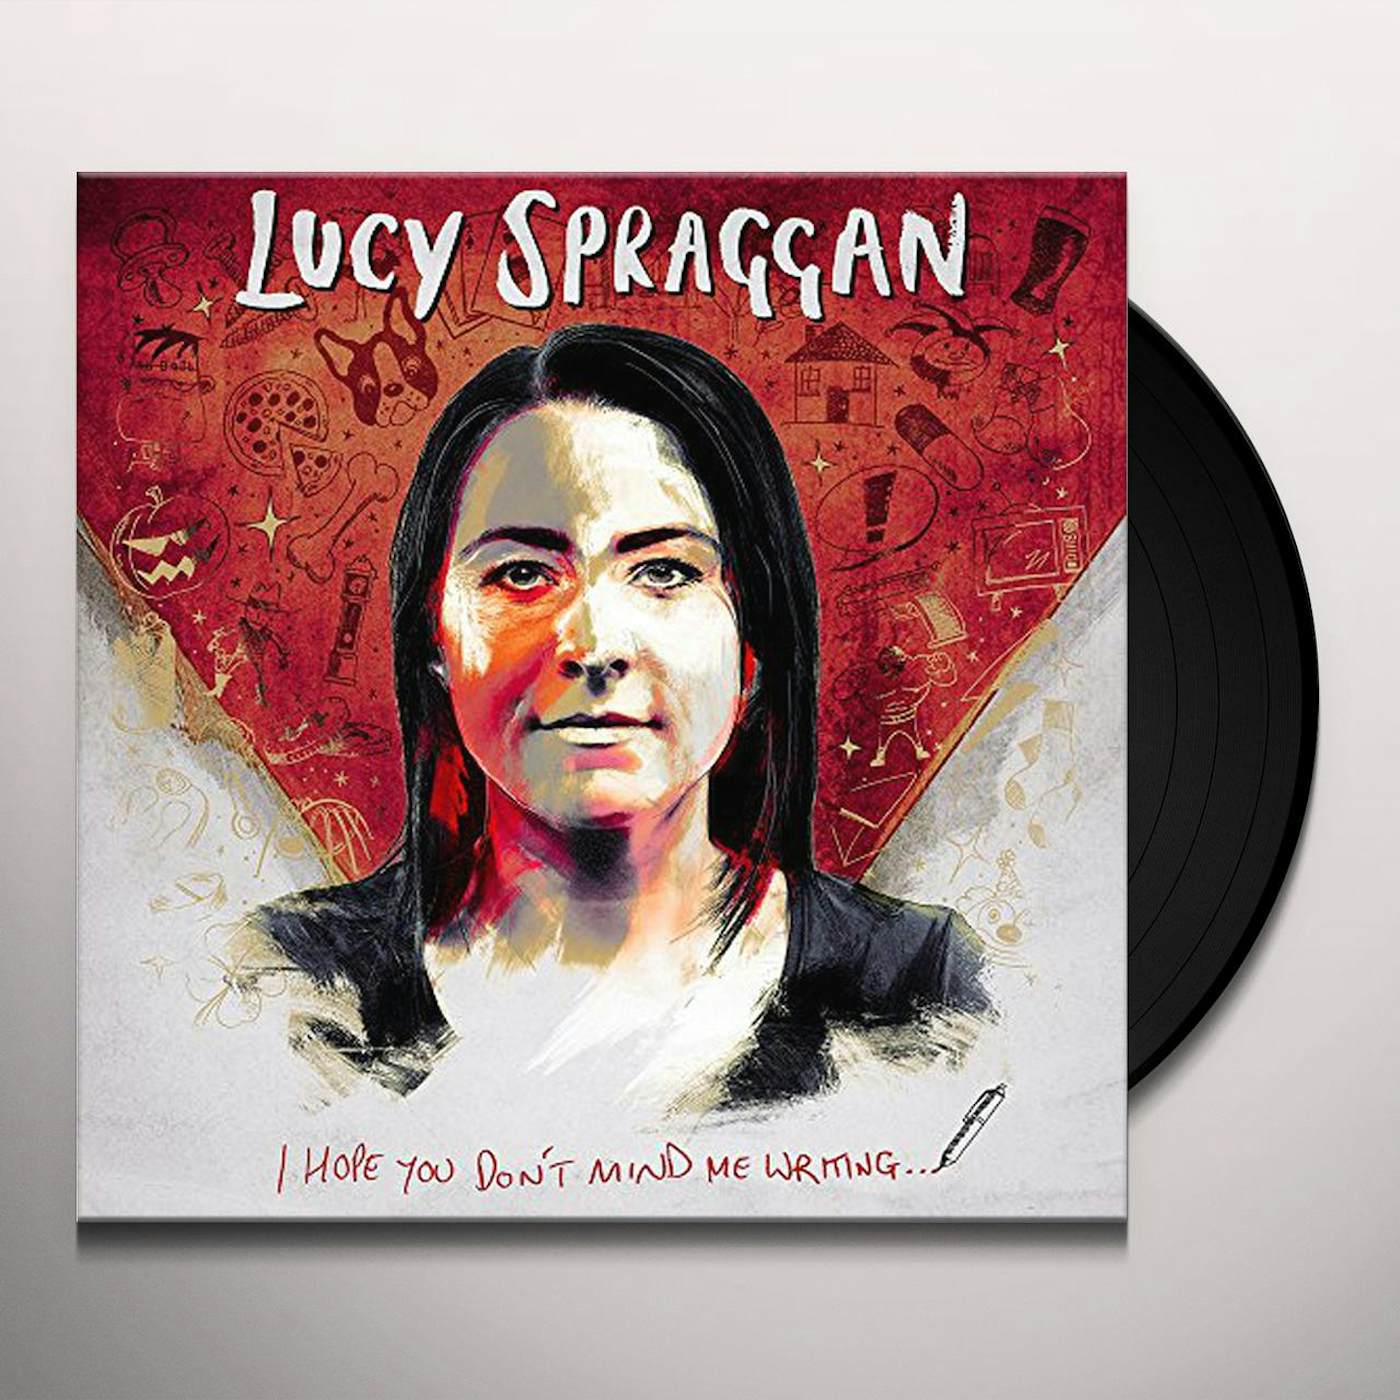 Lucy Spraggan I Hope You Don't Mind Me Writing Vinyl Record